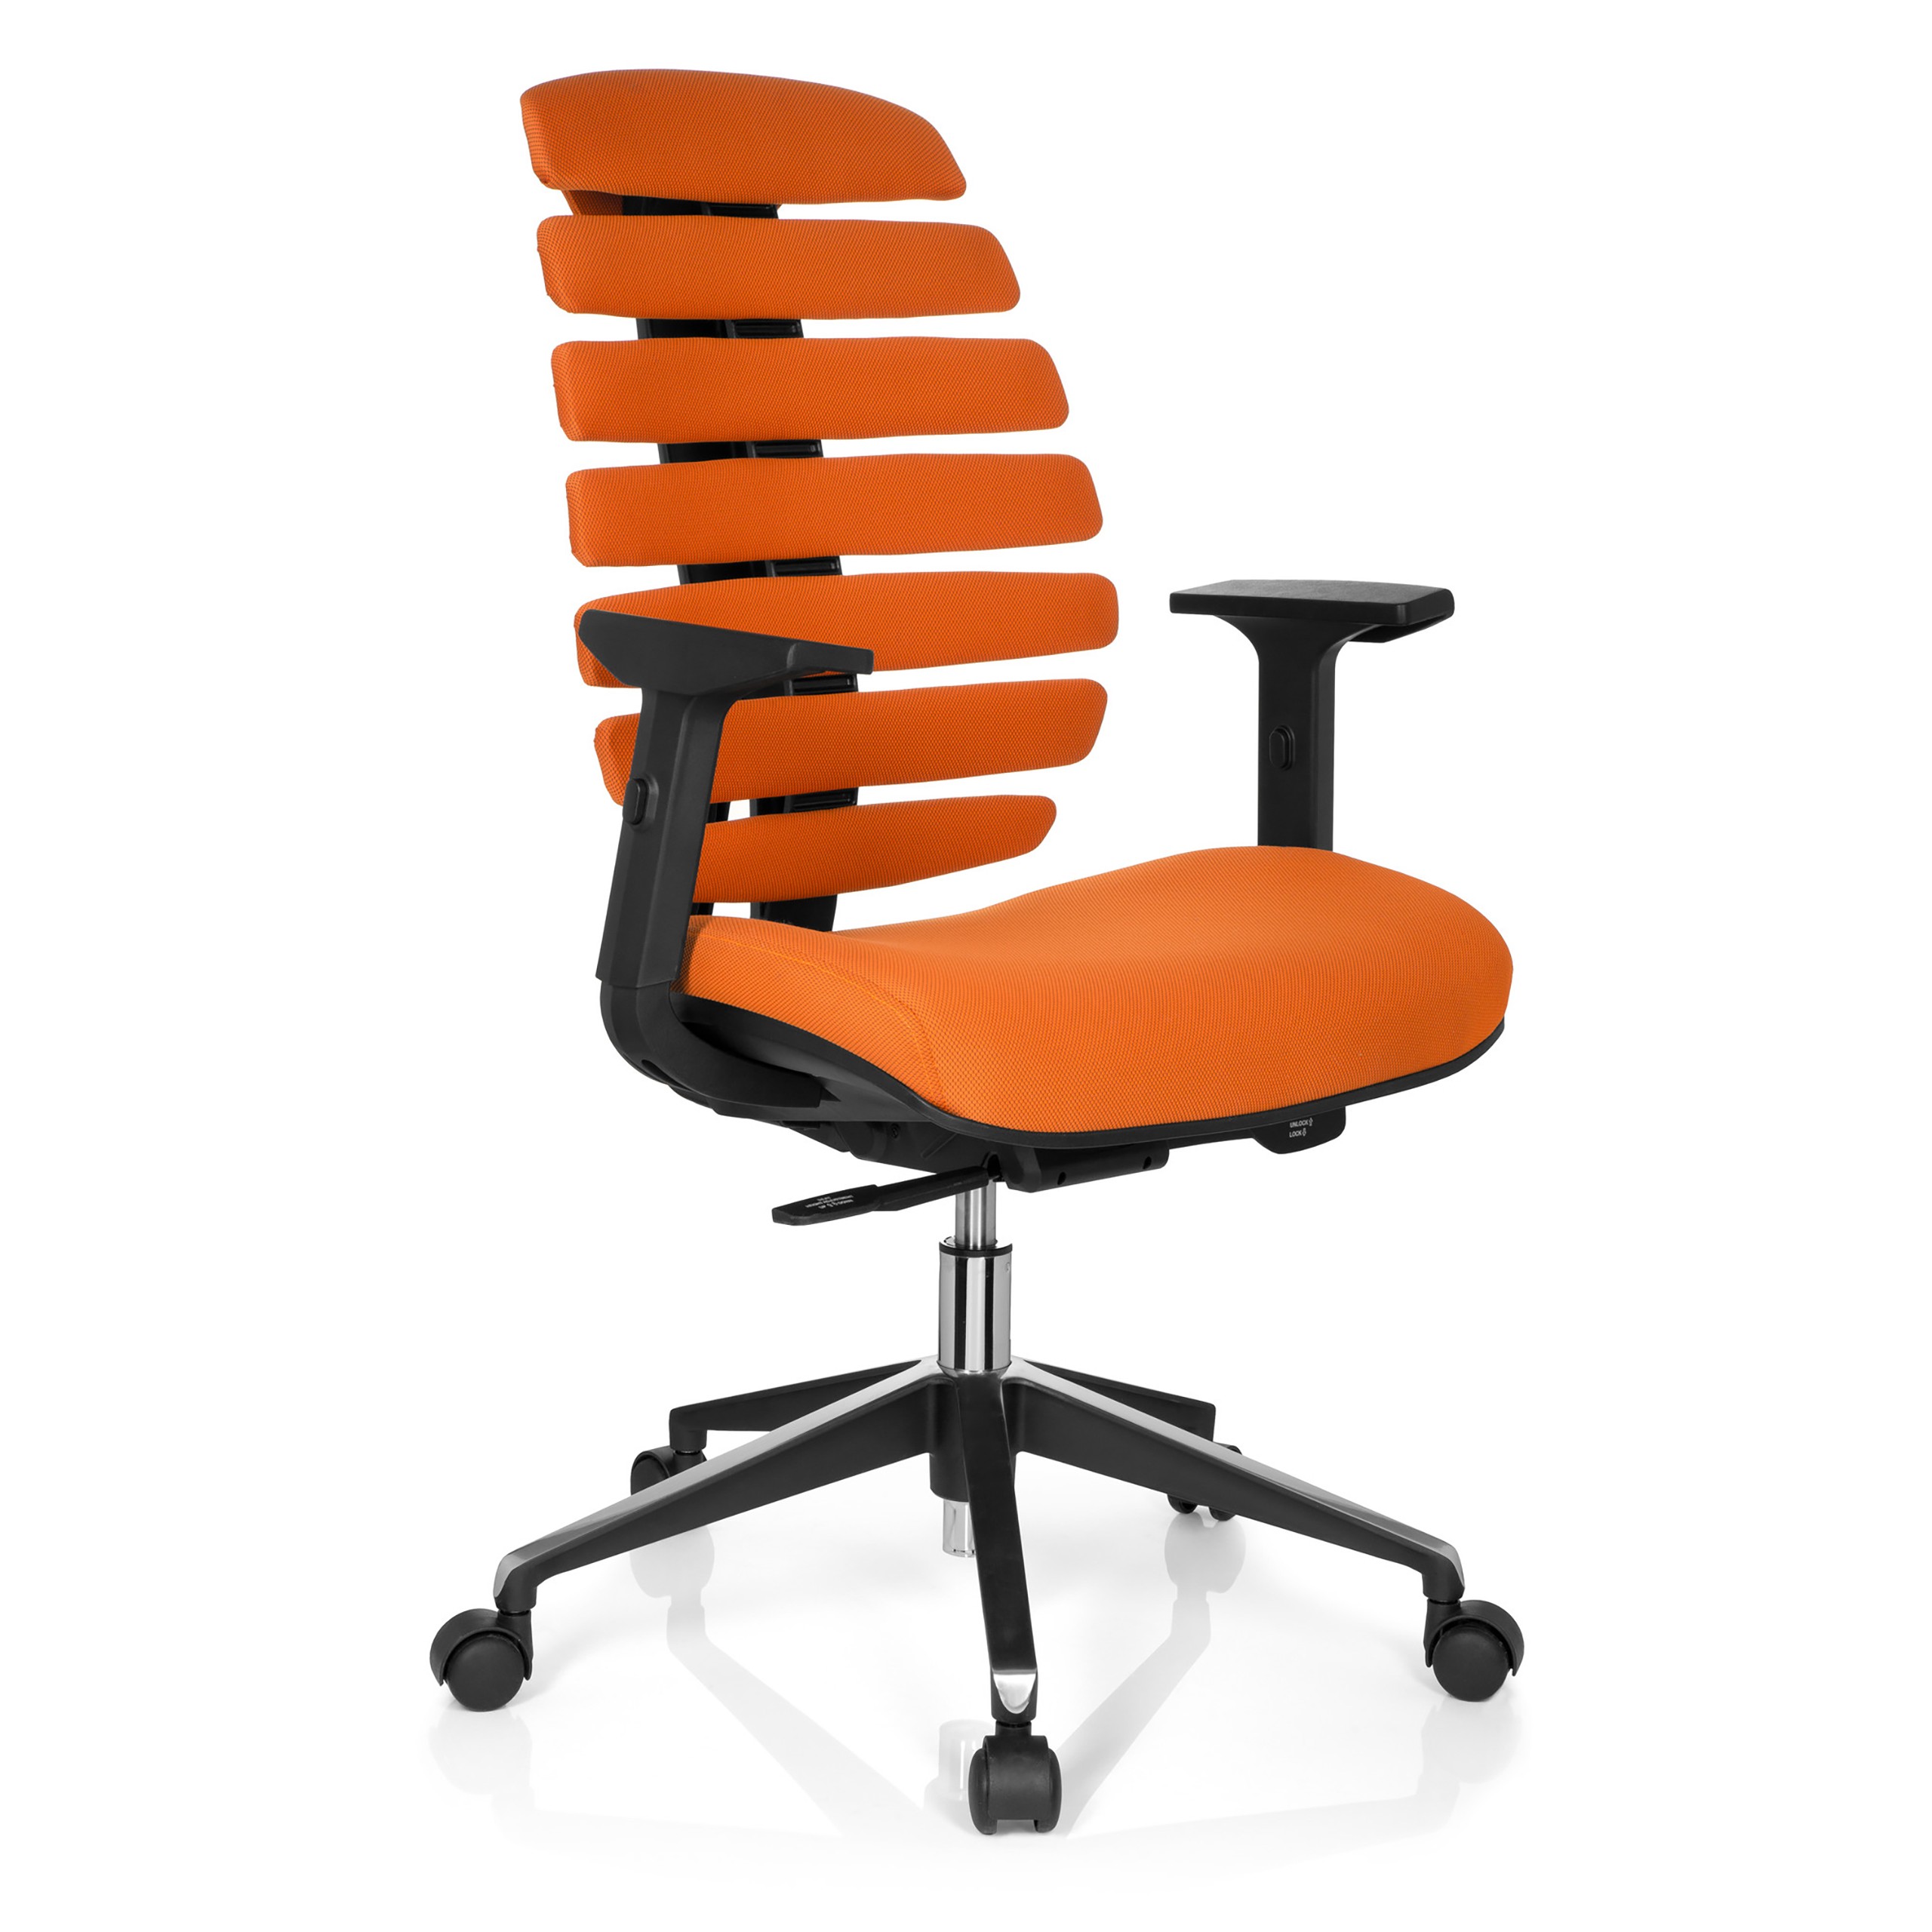 Silla de oficina ergonómica Spine naranja | Ofiprix ®